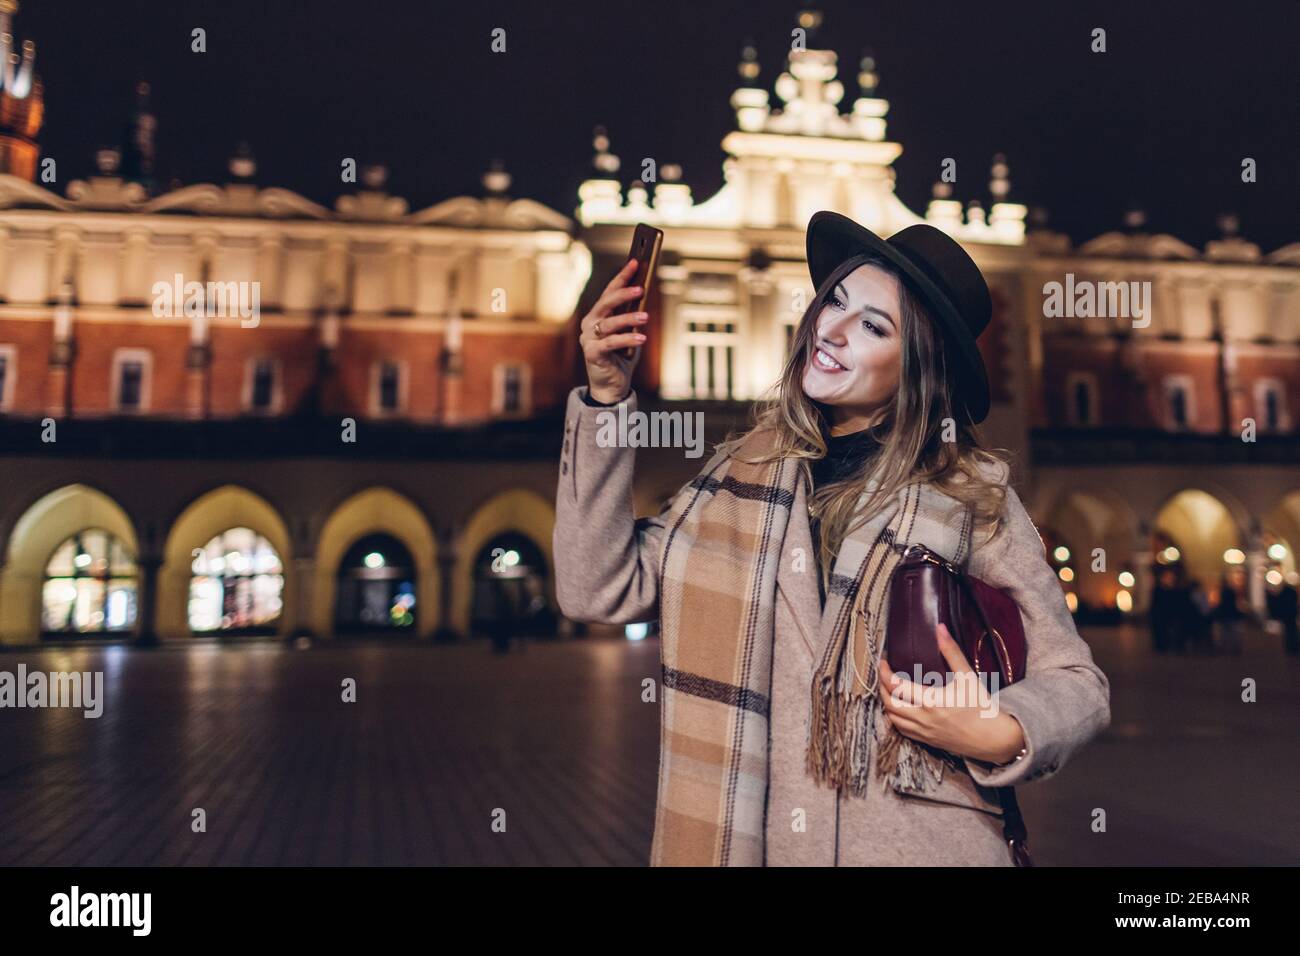 Tourist woman taking selfie on smartphone having fun at night on Market square in Krakow Poland. Travel around Europe Stock Photo